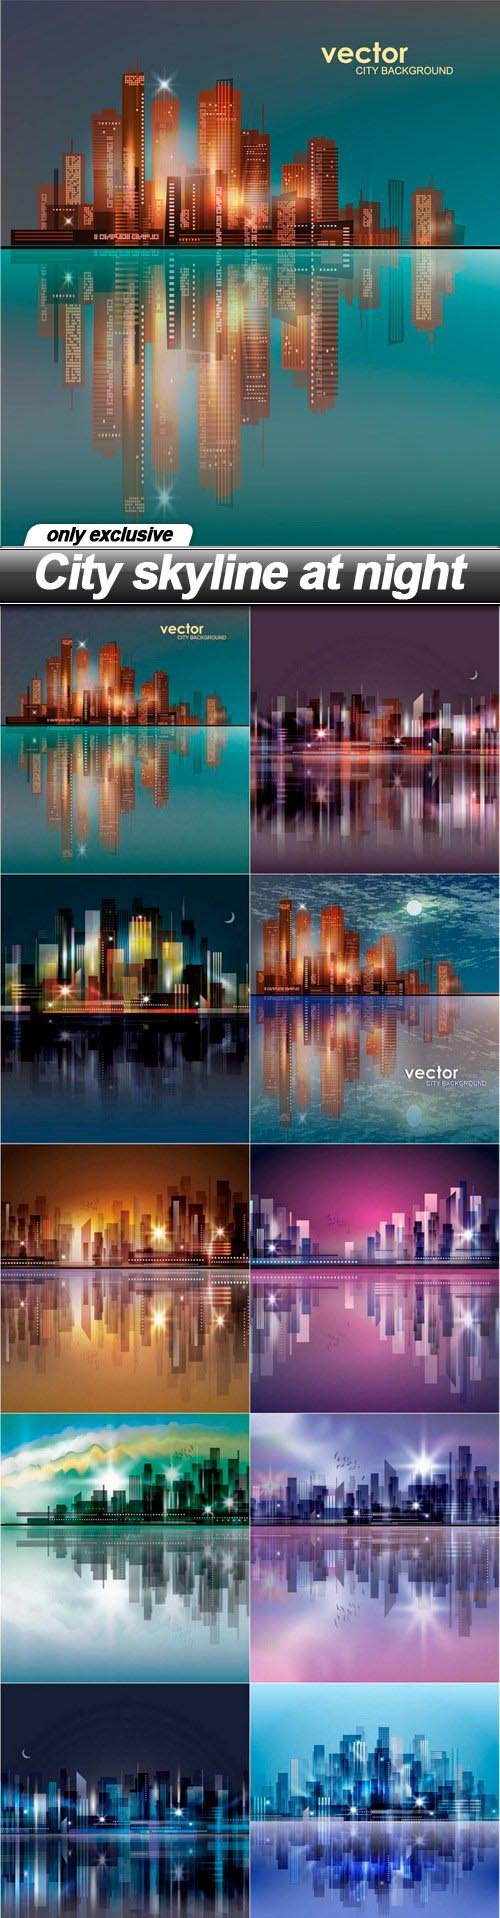 City skyline at night - 10 EPS